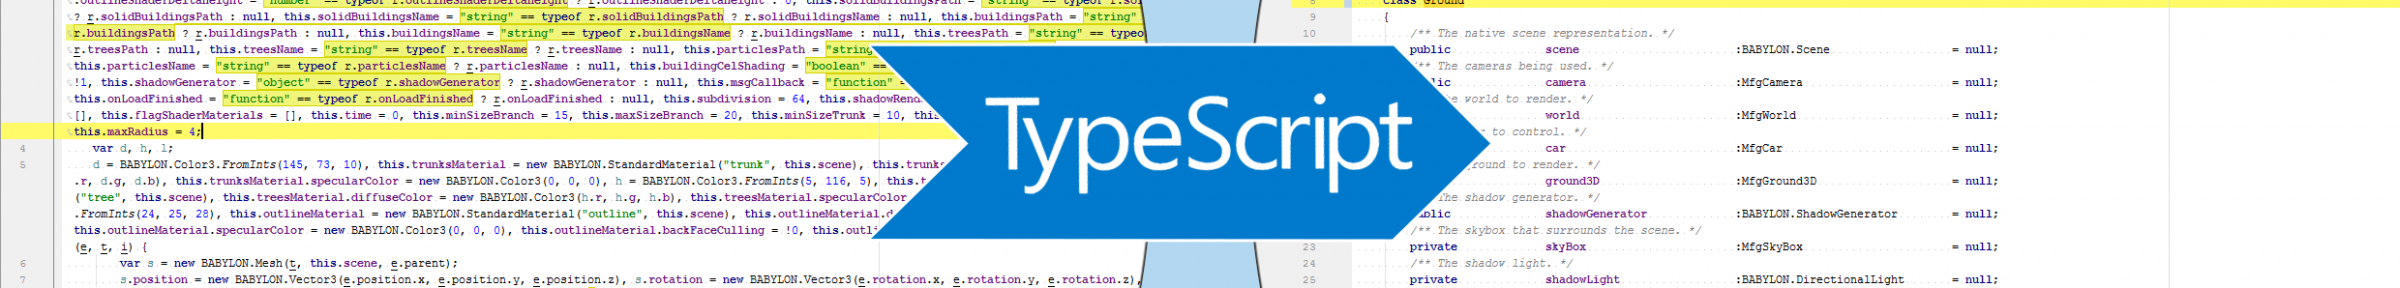 TypeScript als JavaScript-Alternative